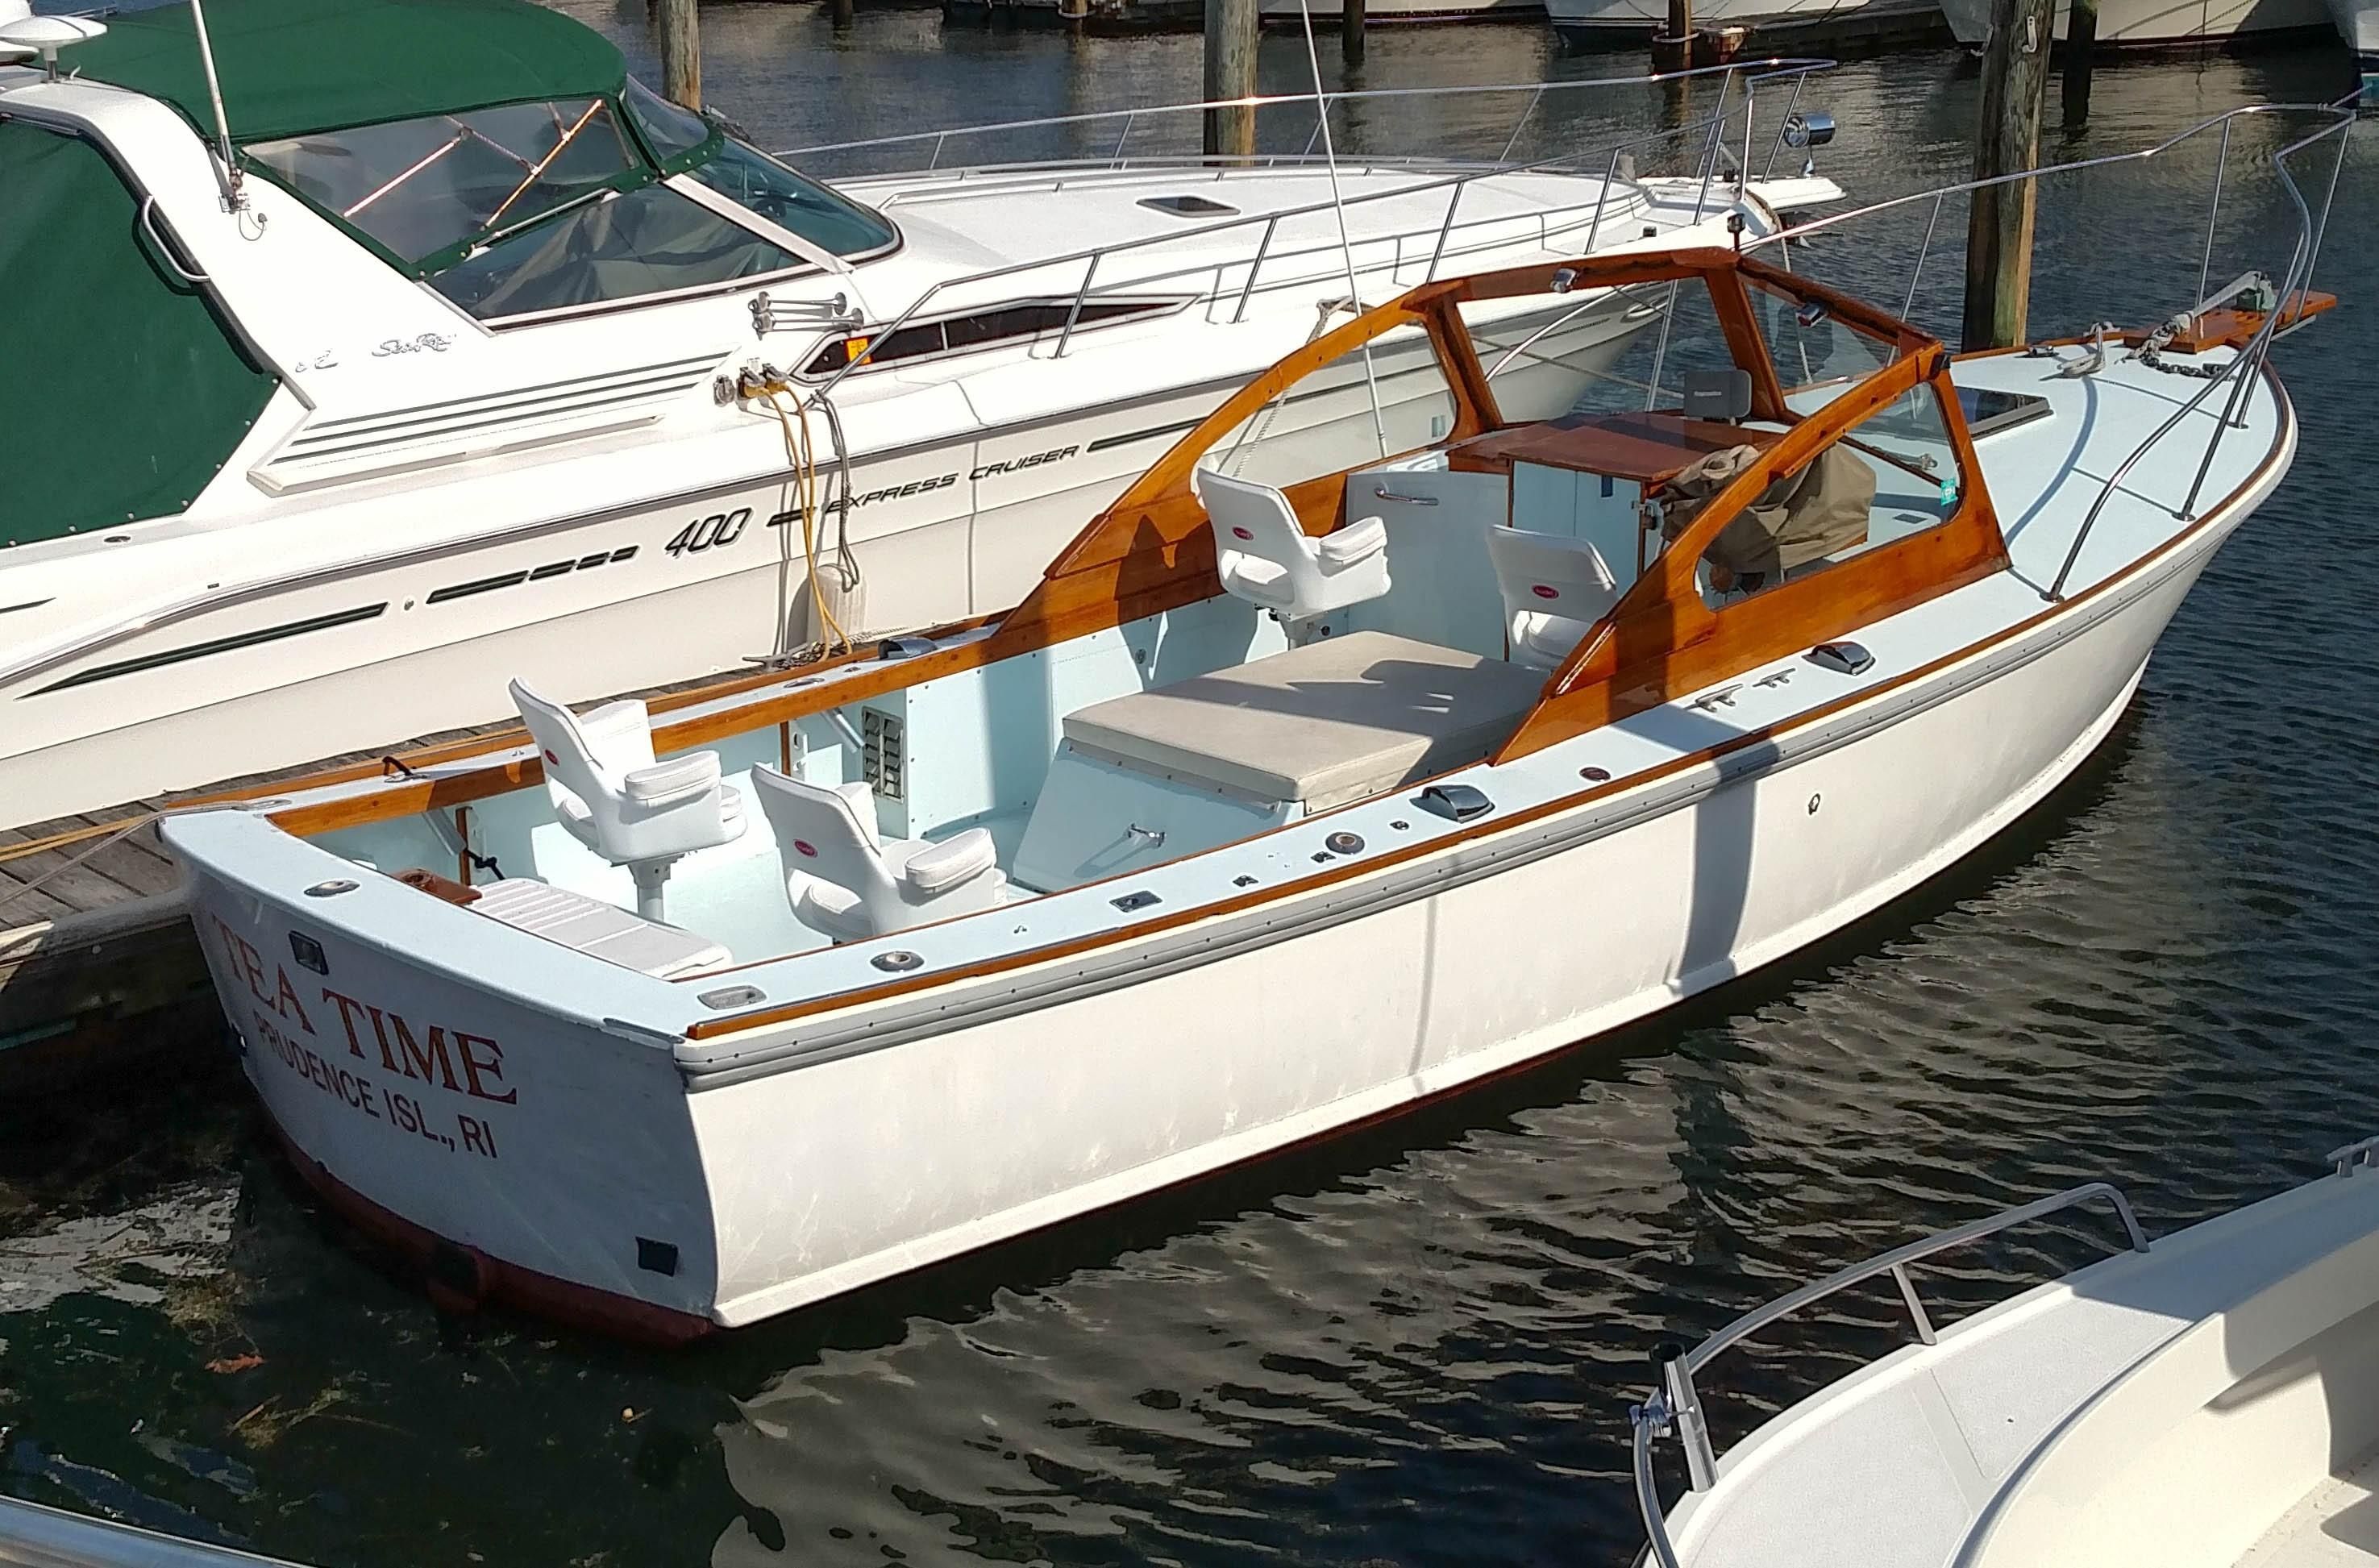 1973 Dyer 29 Bass Boat Cruiser for sale - YachtWorld